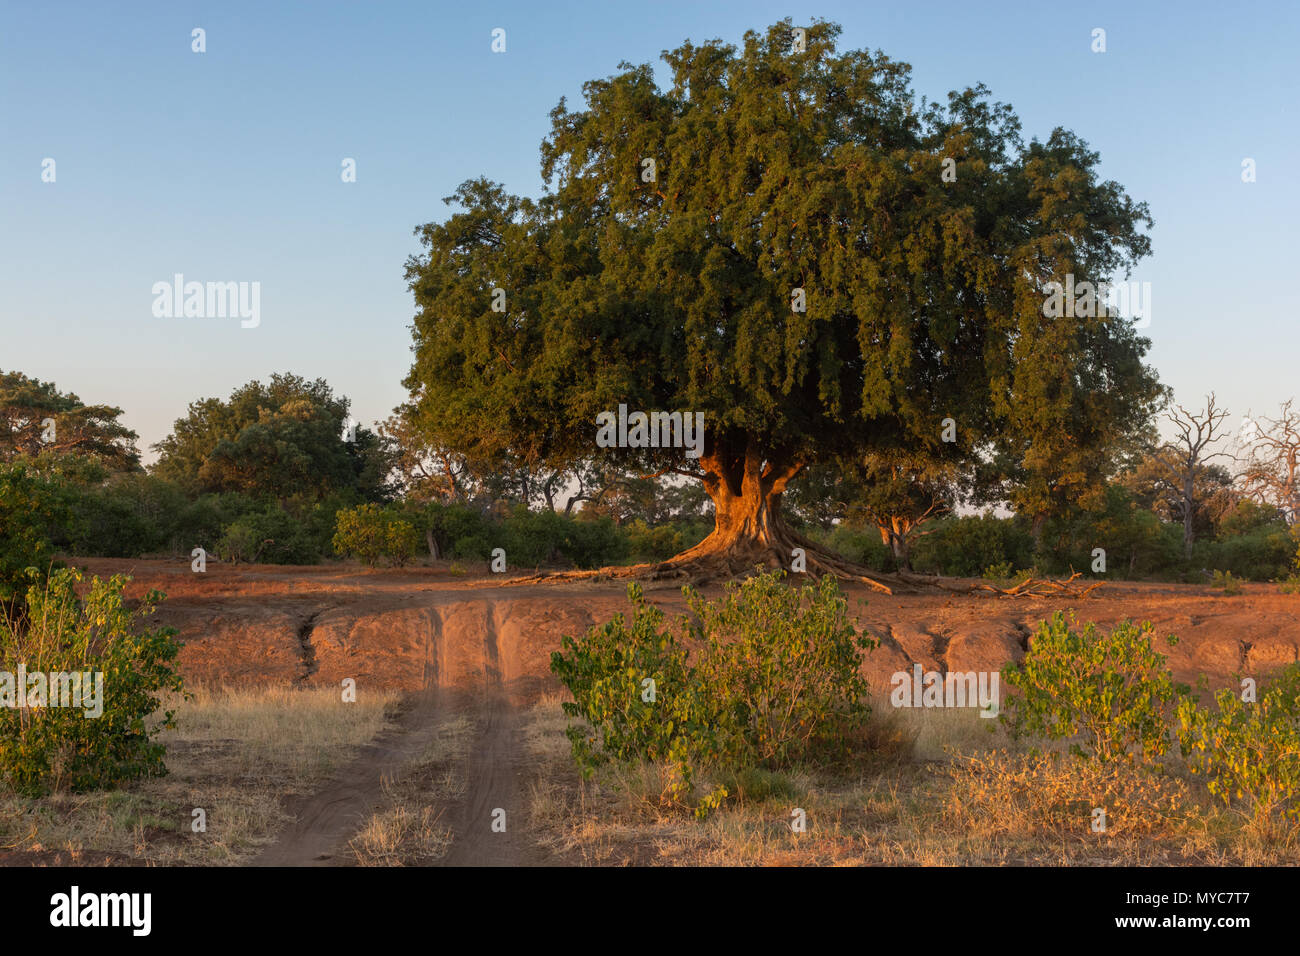 The Nyala or Mashatu Tree in The Mashatu Private Game Reserve in Botswana Stock Photo